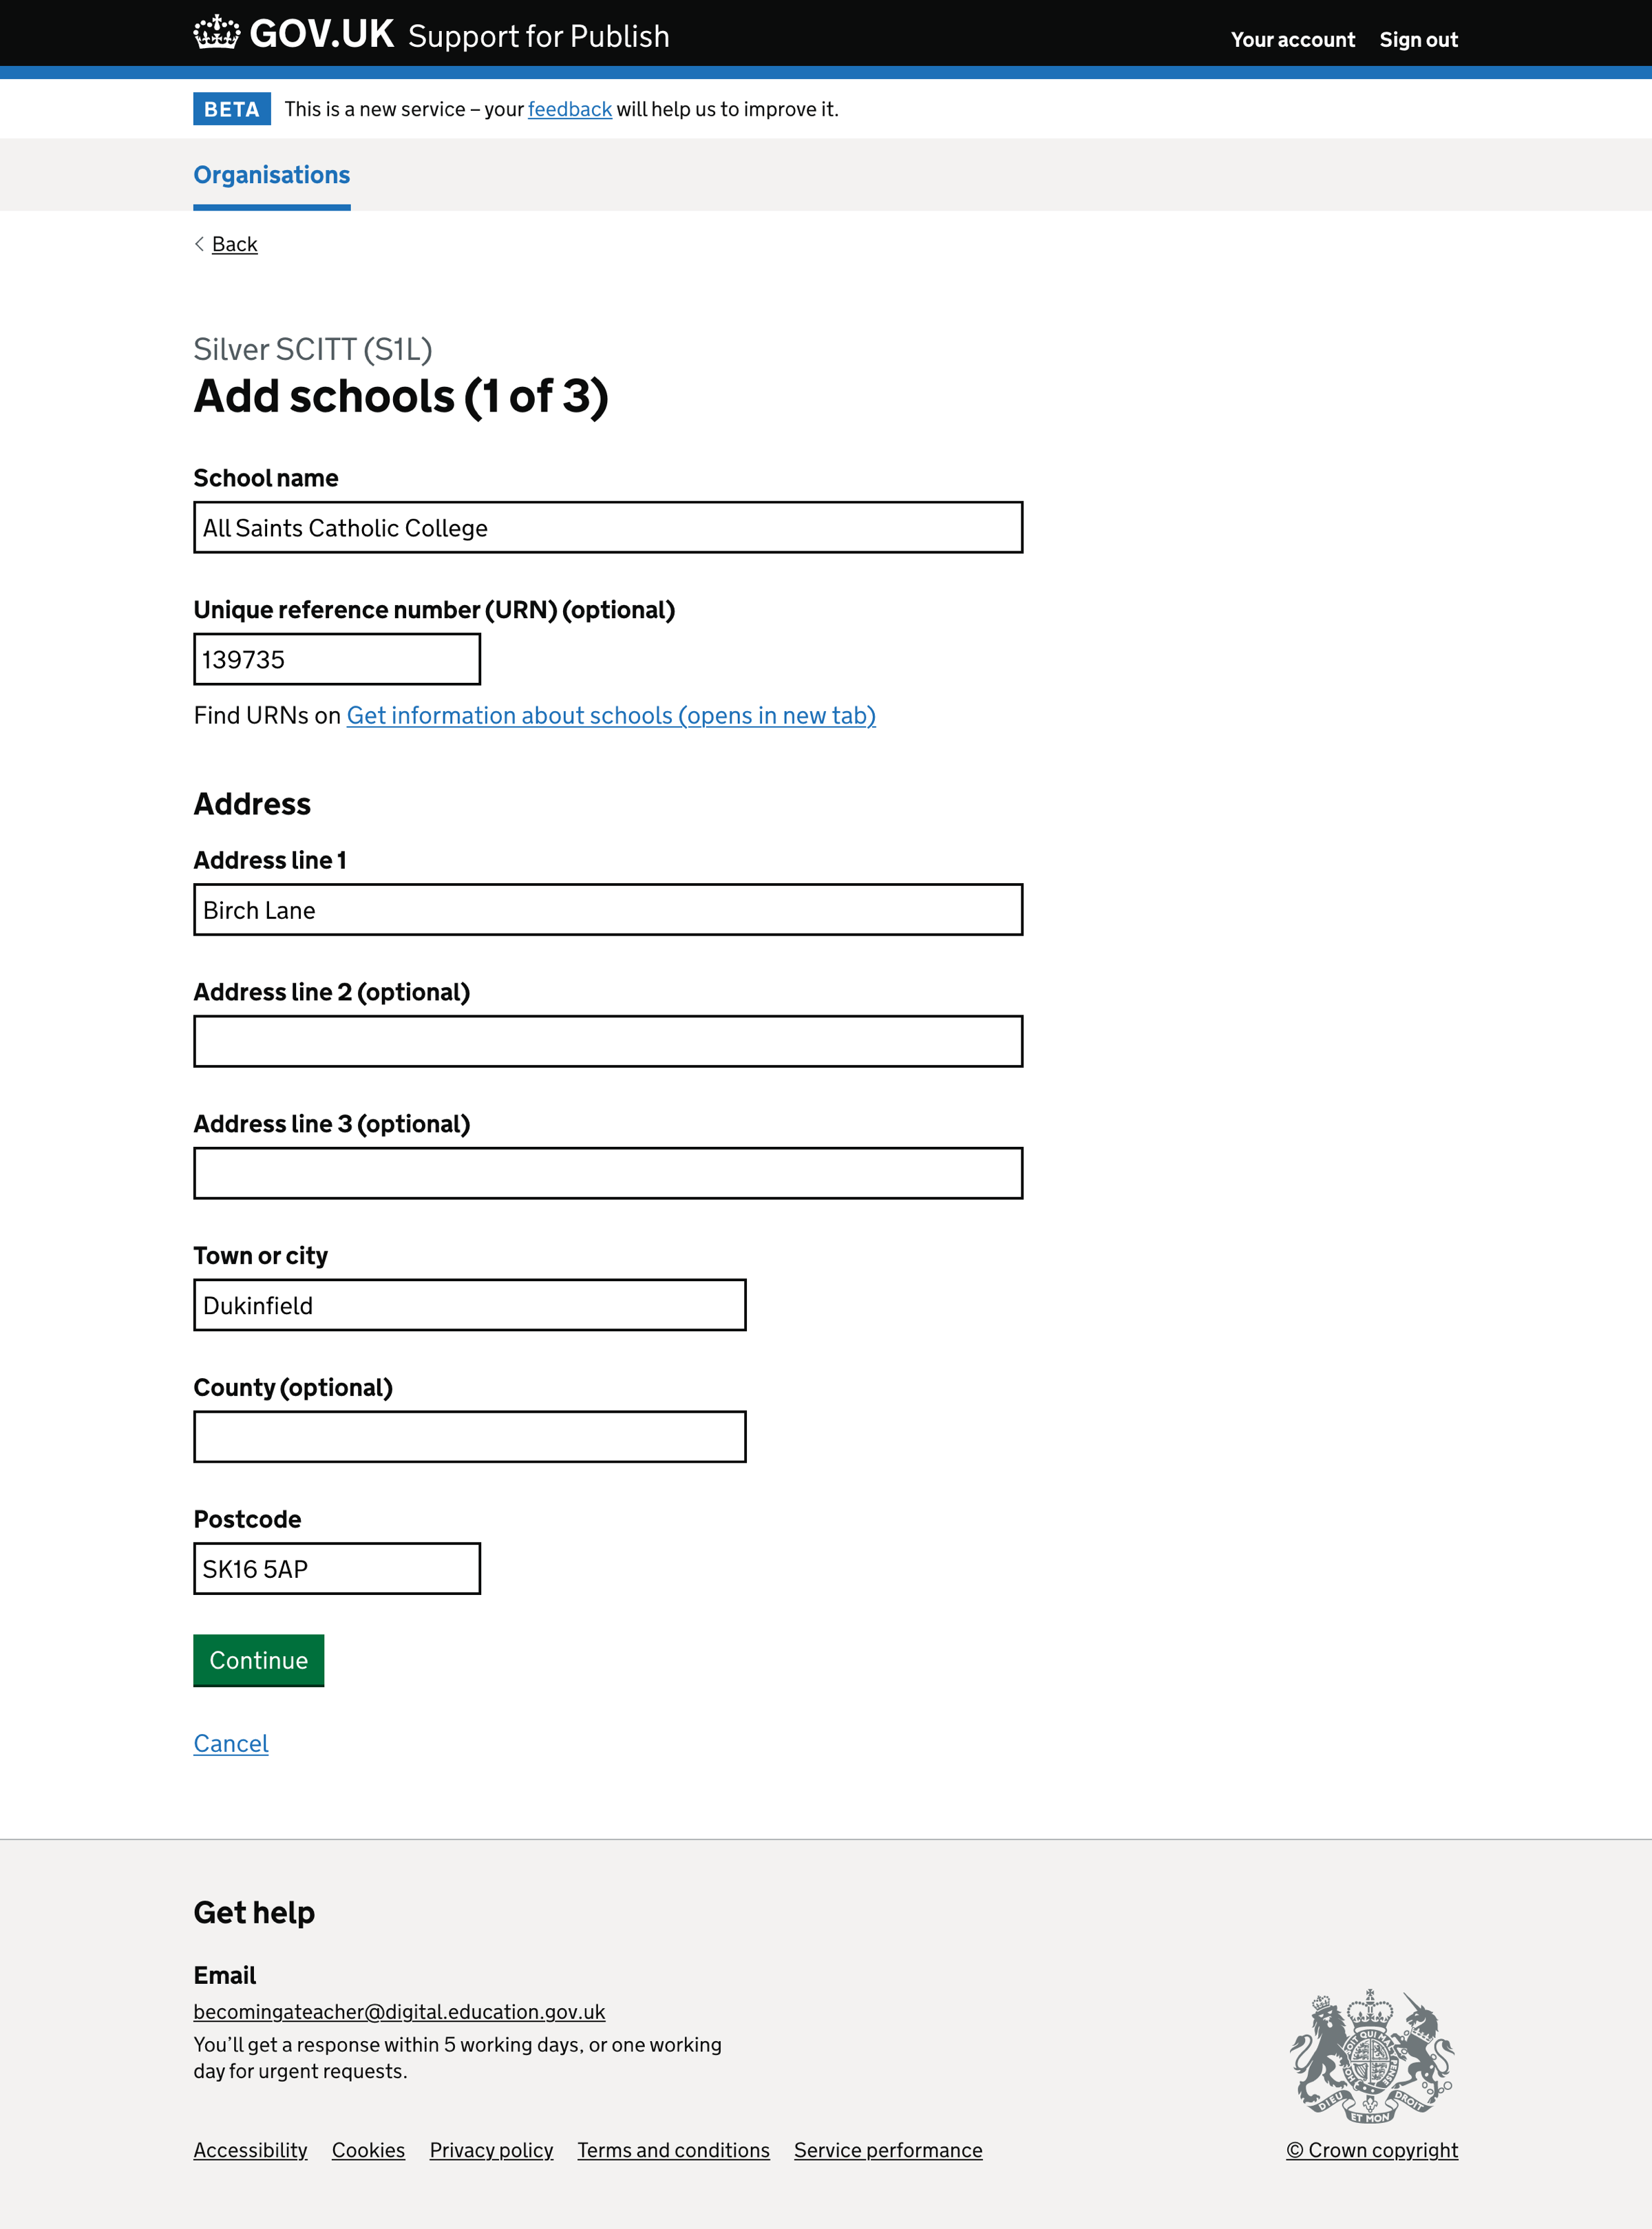 Screenshot of Add multiple schools - form